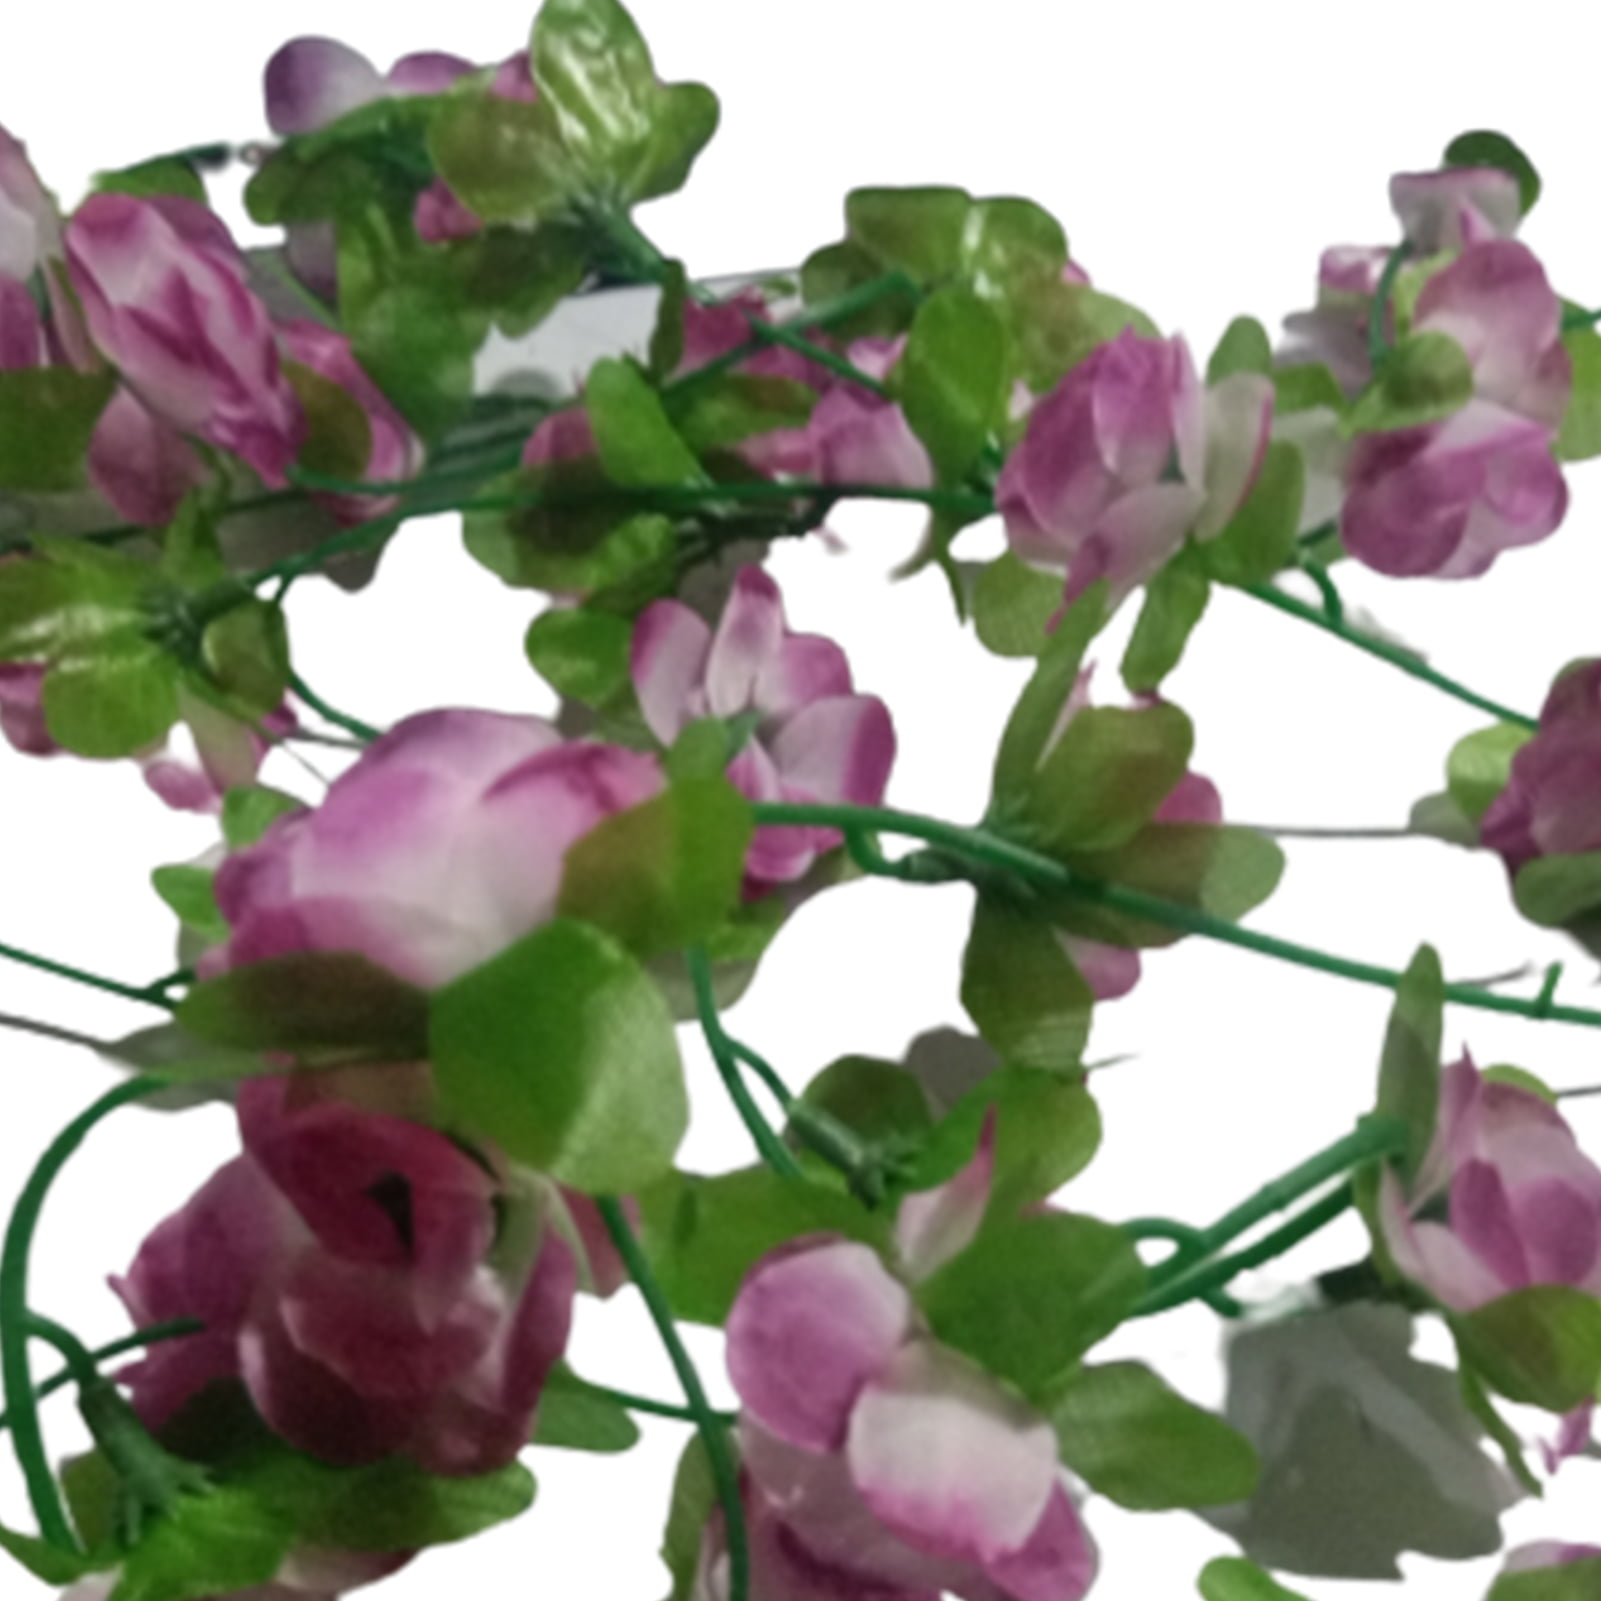 Details about   100pcs Purple Rose Climbing Rose Seeds Perennial Flower Garden Decor Home Plant 